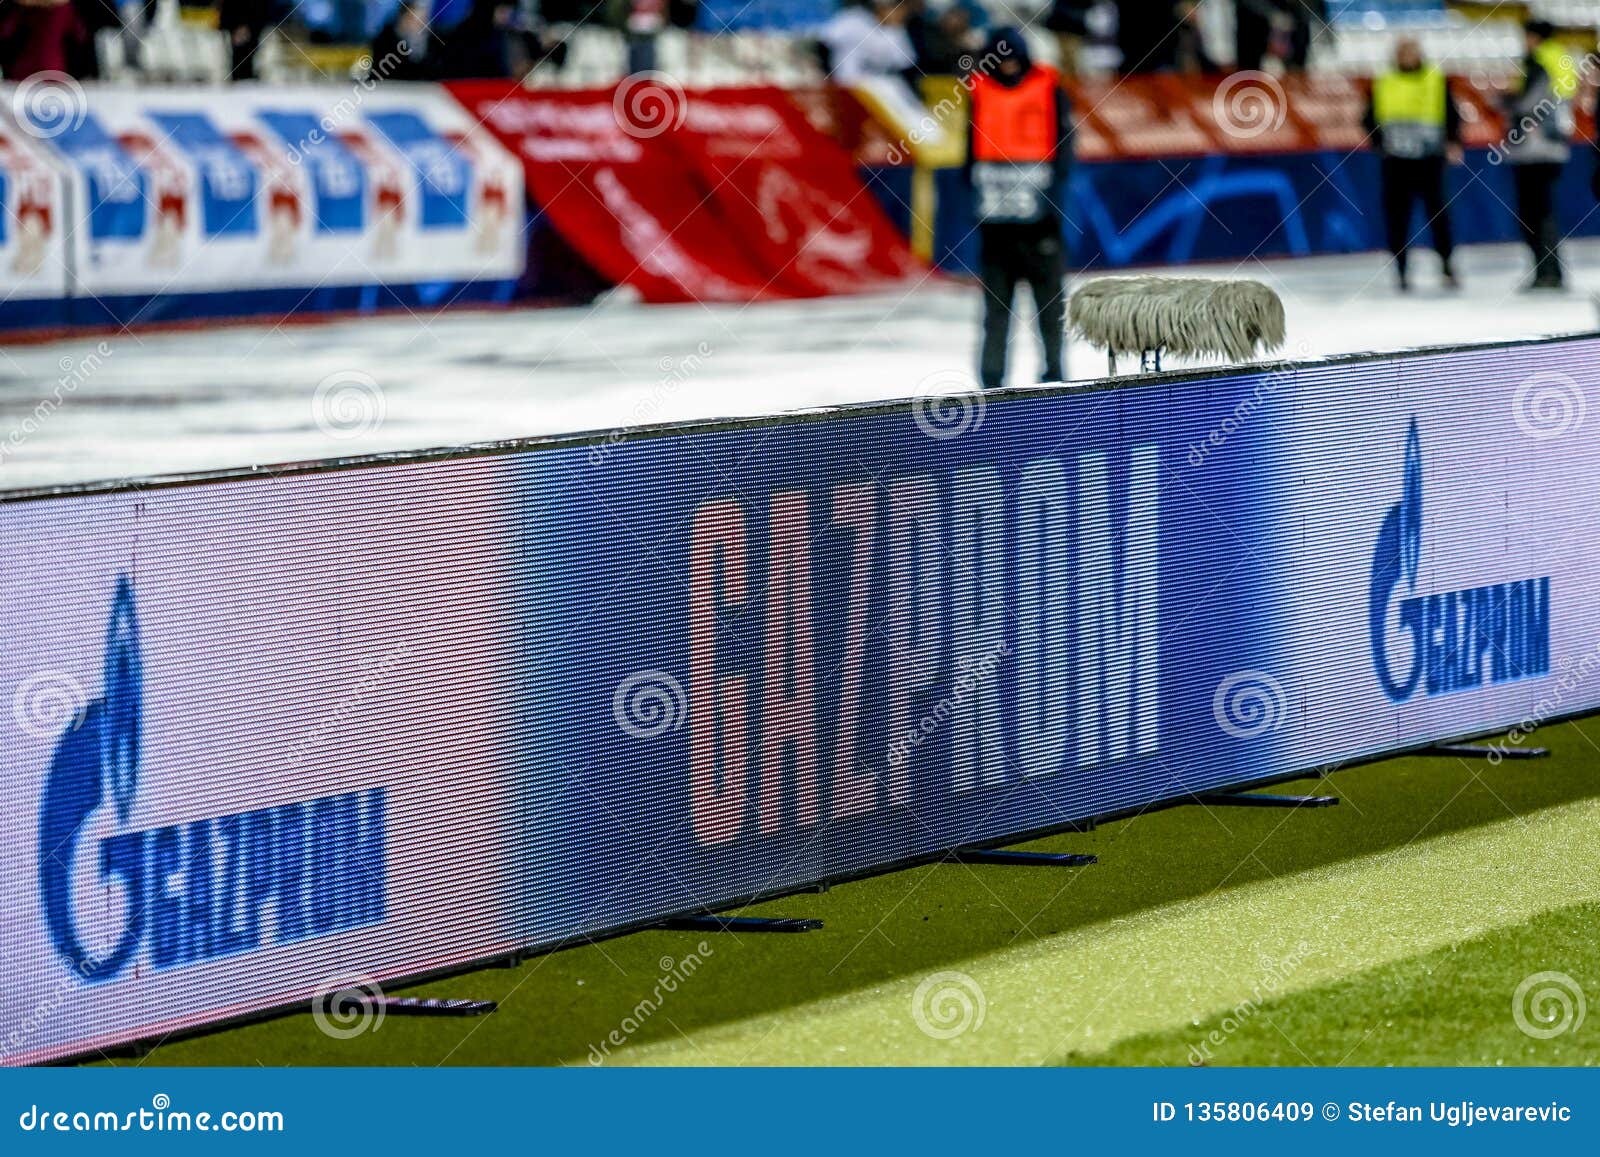 gazprom champions league